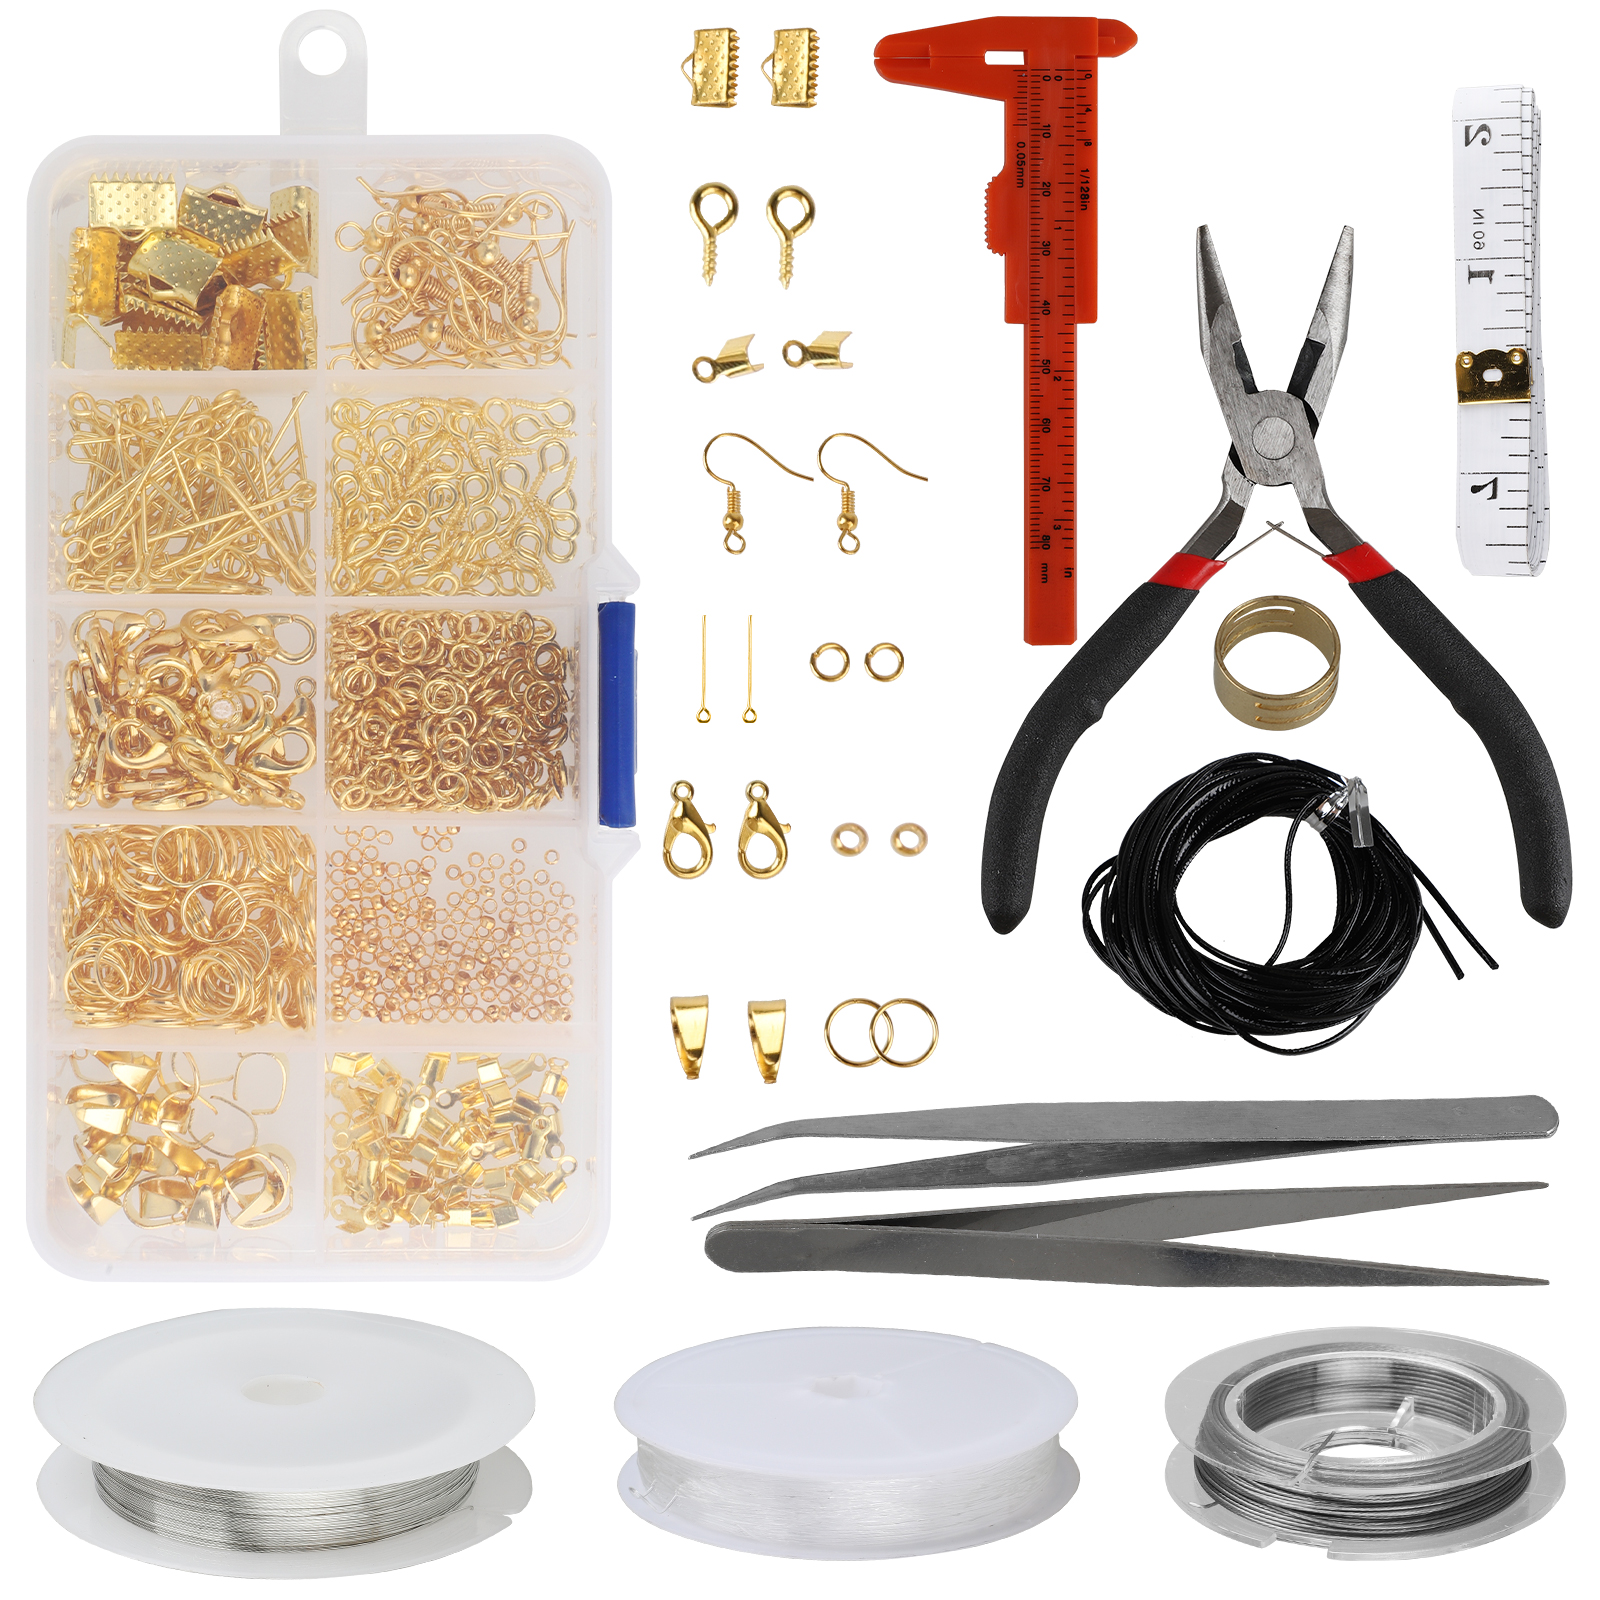 Starter Kit Accessories Jewelry Making